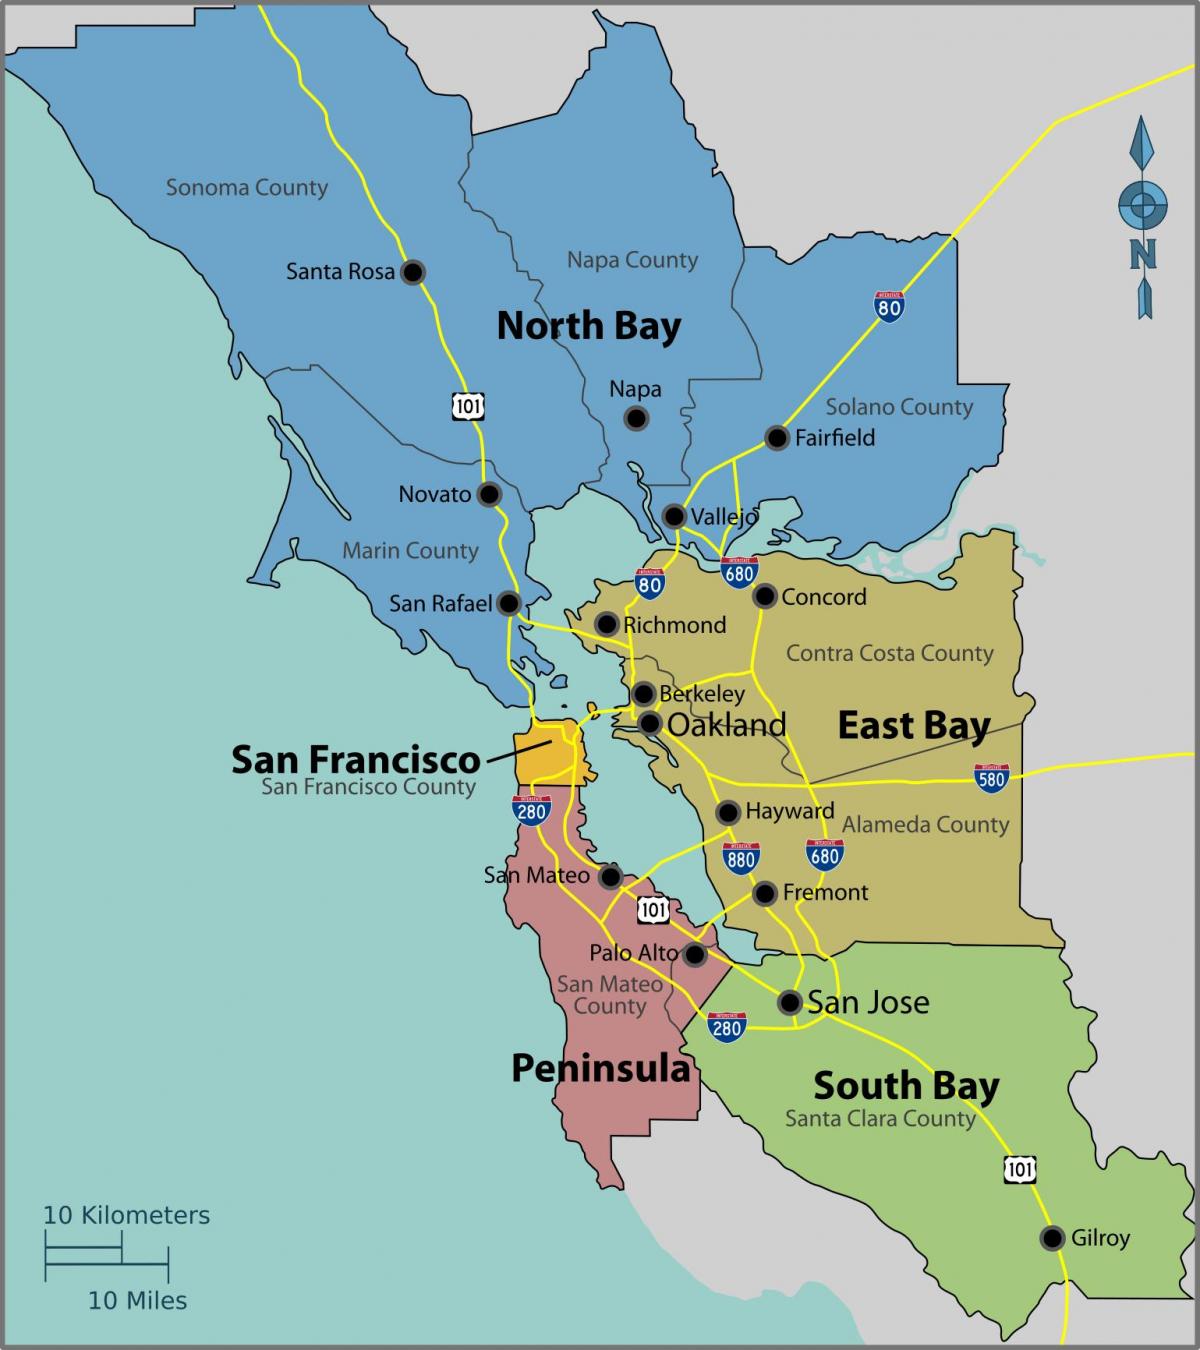 San Francisko na mapi